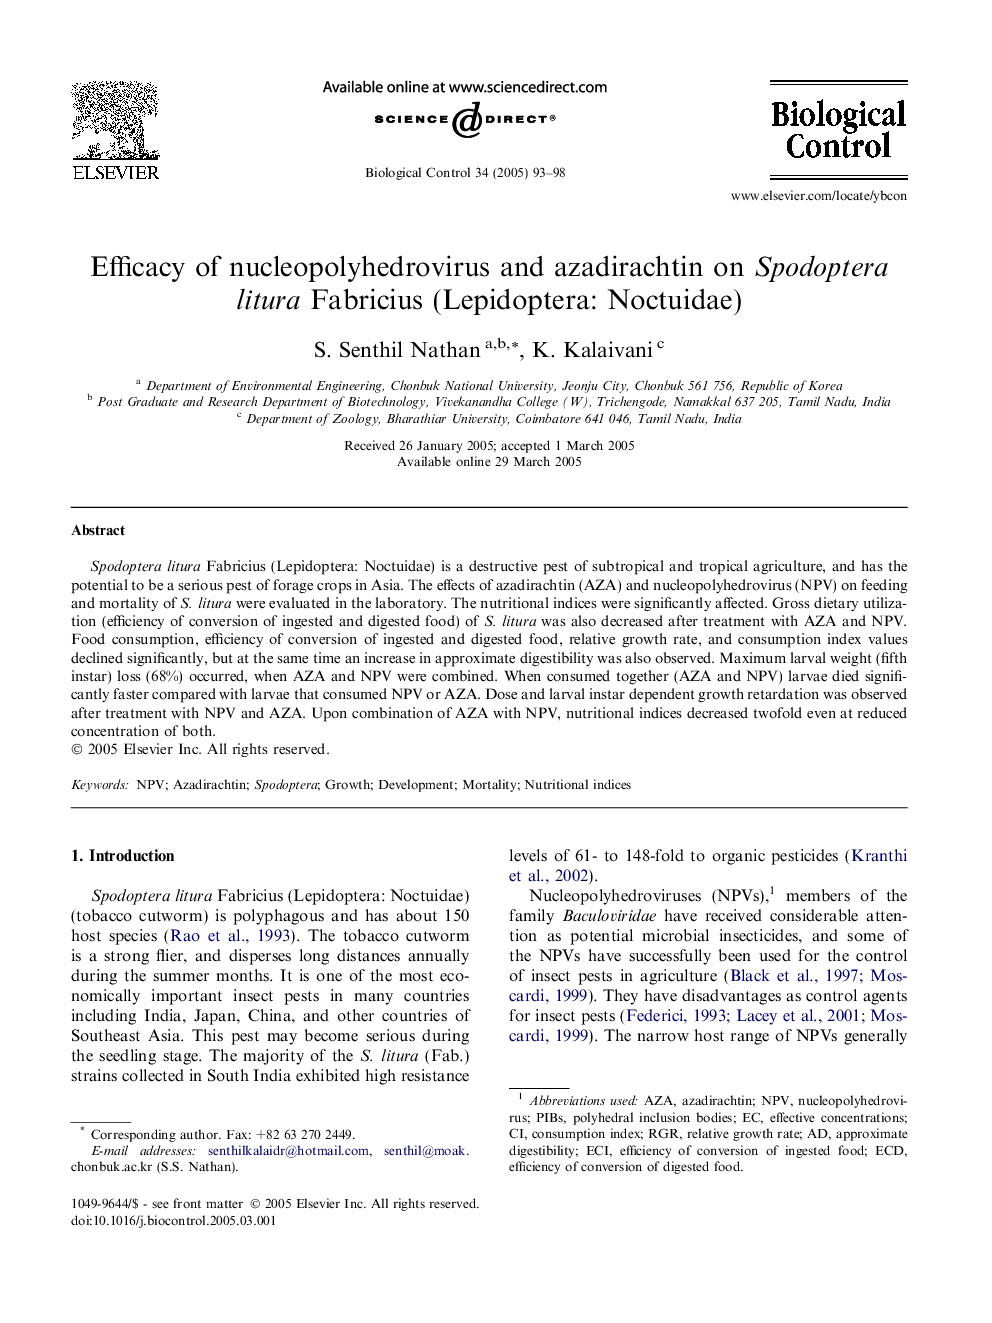 Efficacy of nucleopolyhedrovirus and azadirachtin on Spodoptera litura Fabricius (Lepidoptera: Noctuidae)